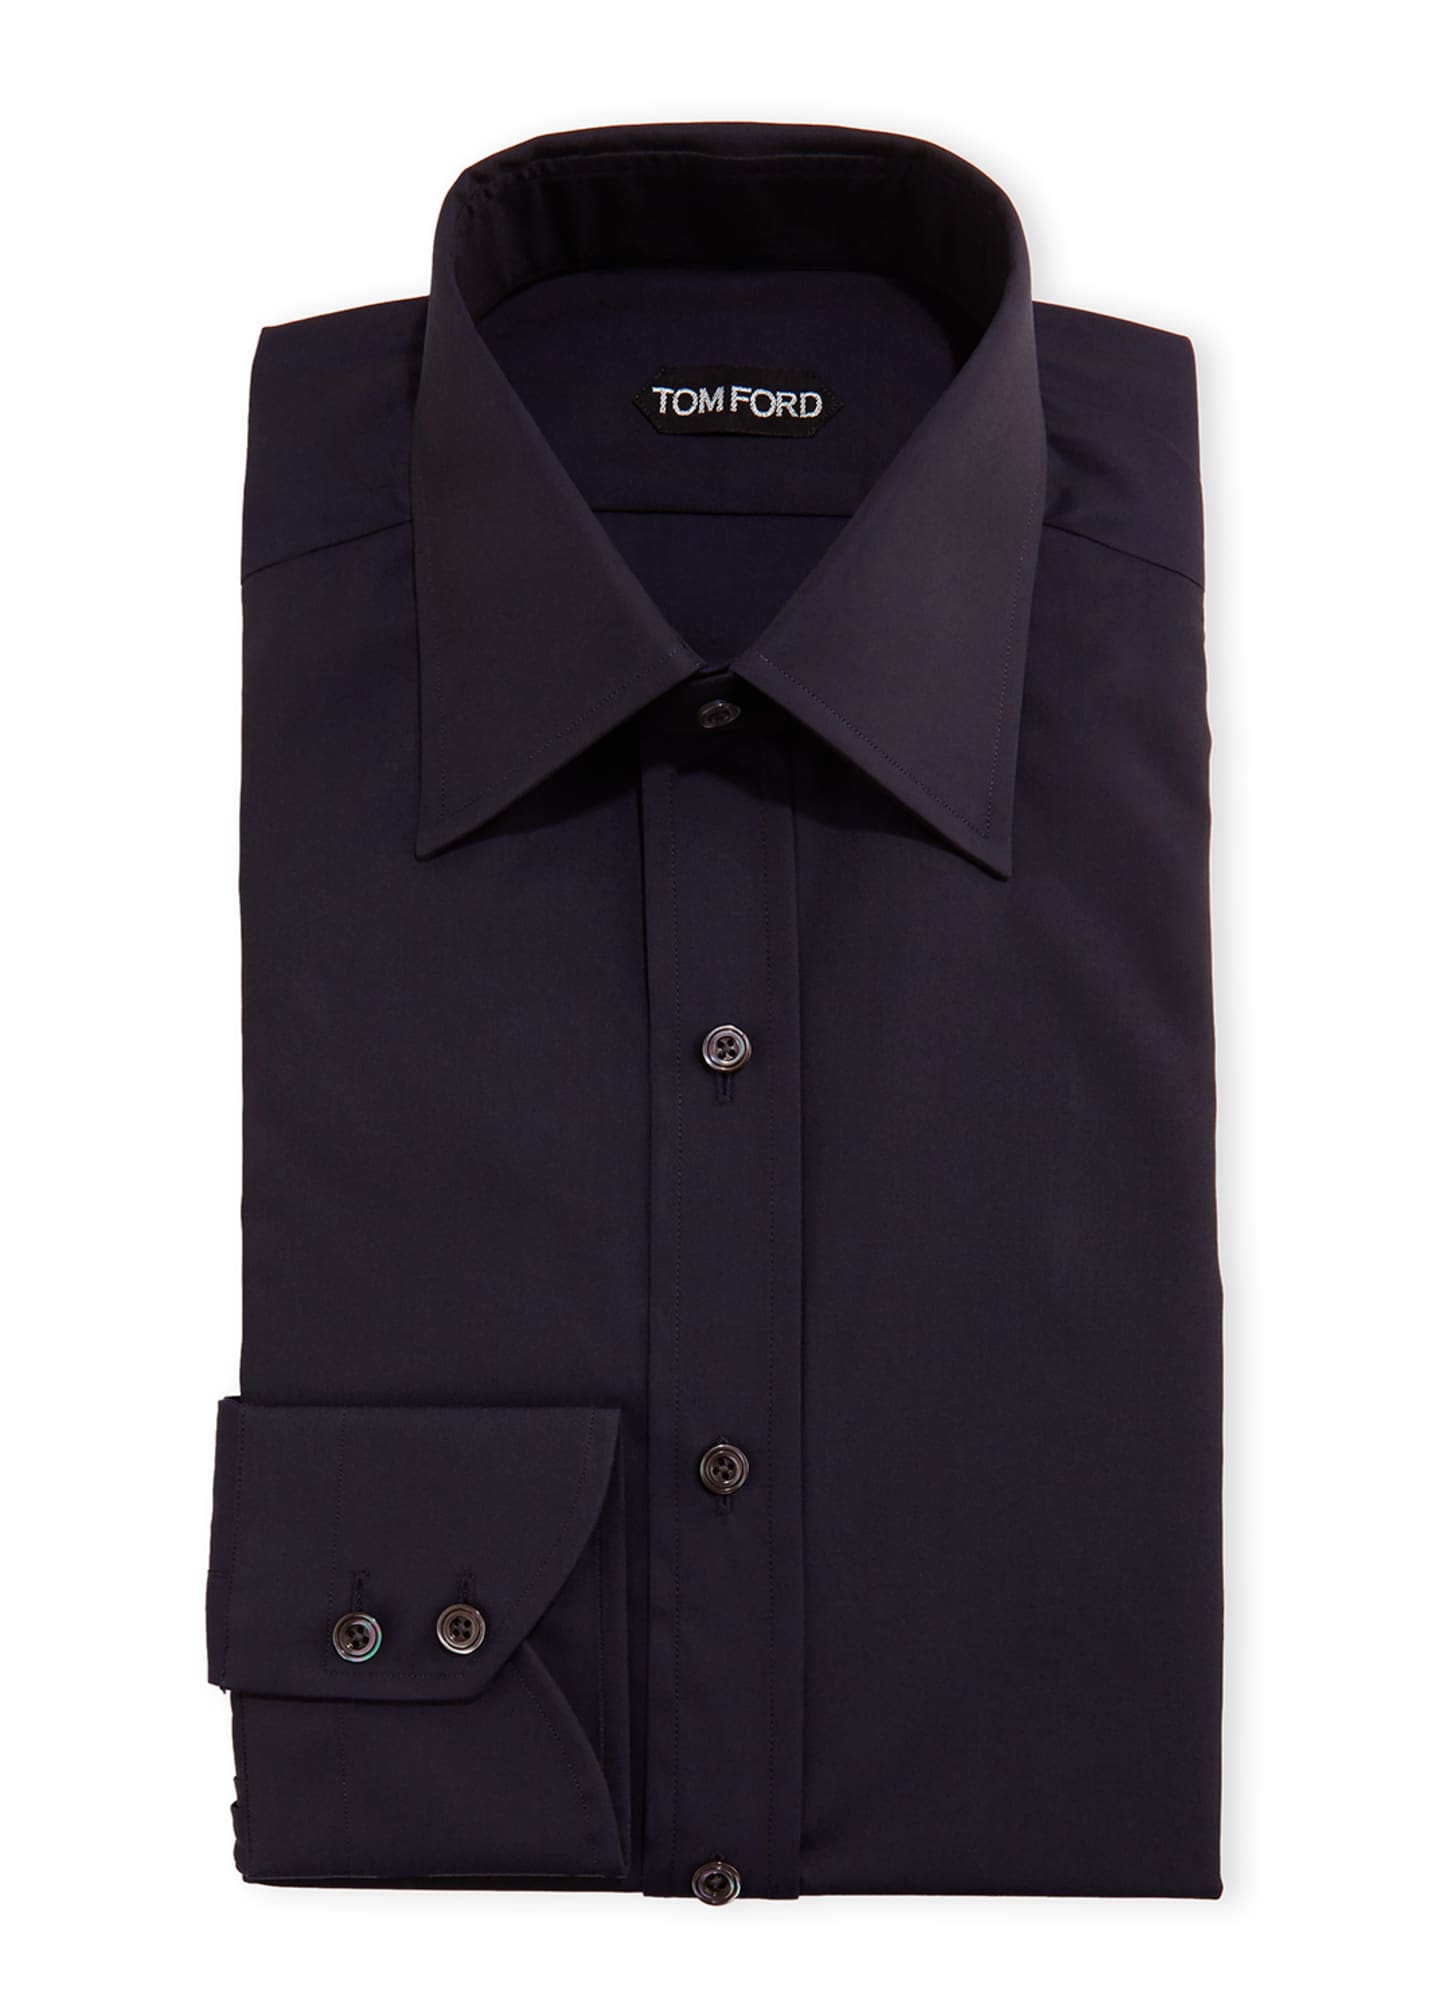 TOM FORD Slim-Fit Classic-Collar Dress Shirt, Navy - Bergdorf Goodman